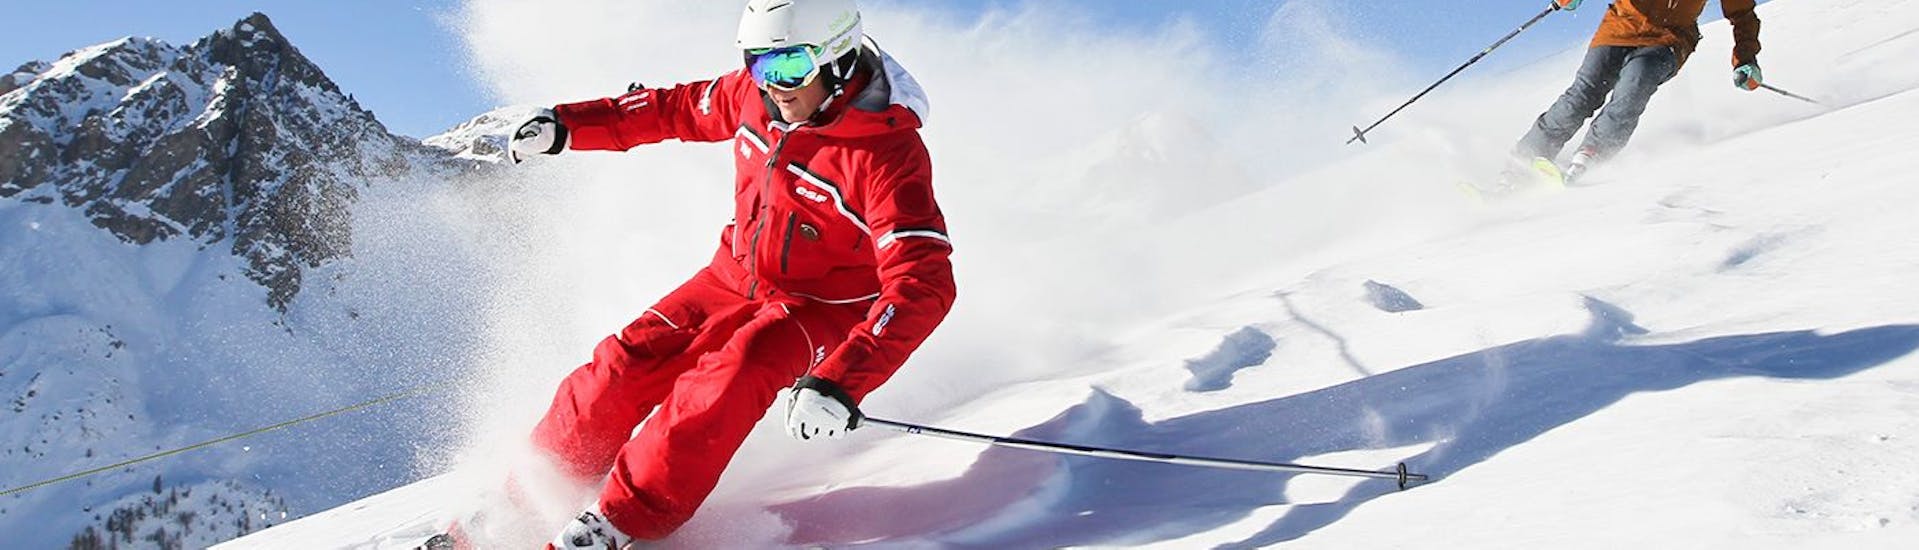 Lezioni di sci per adulti a partire da 14 anni per tutti i livelli.